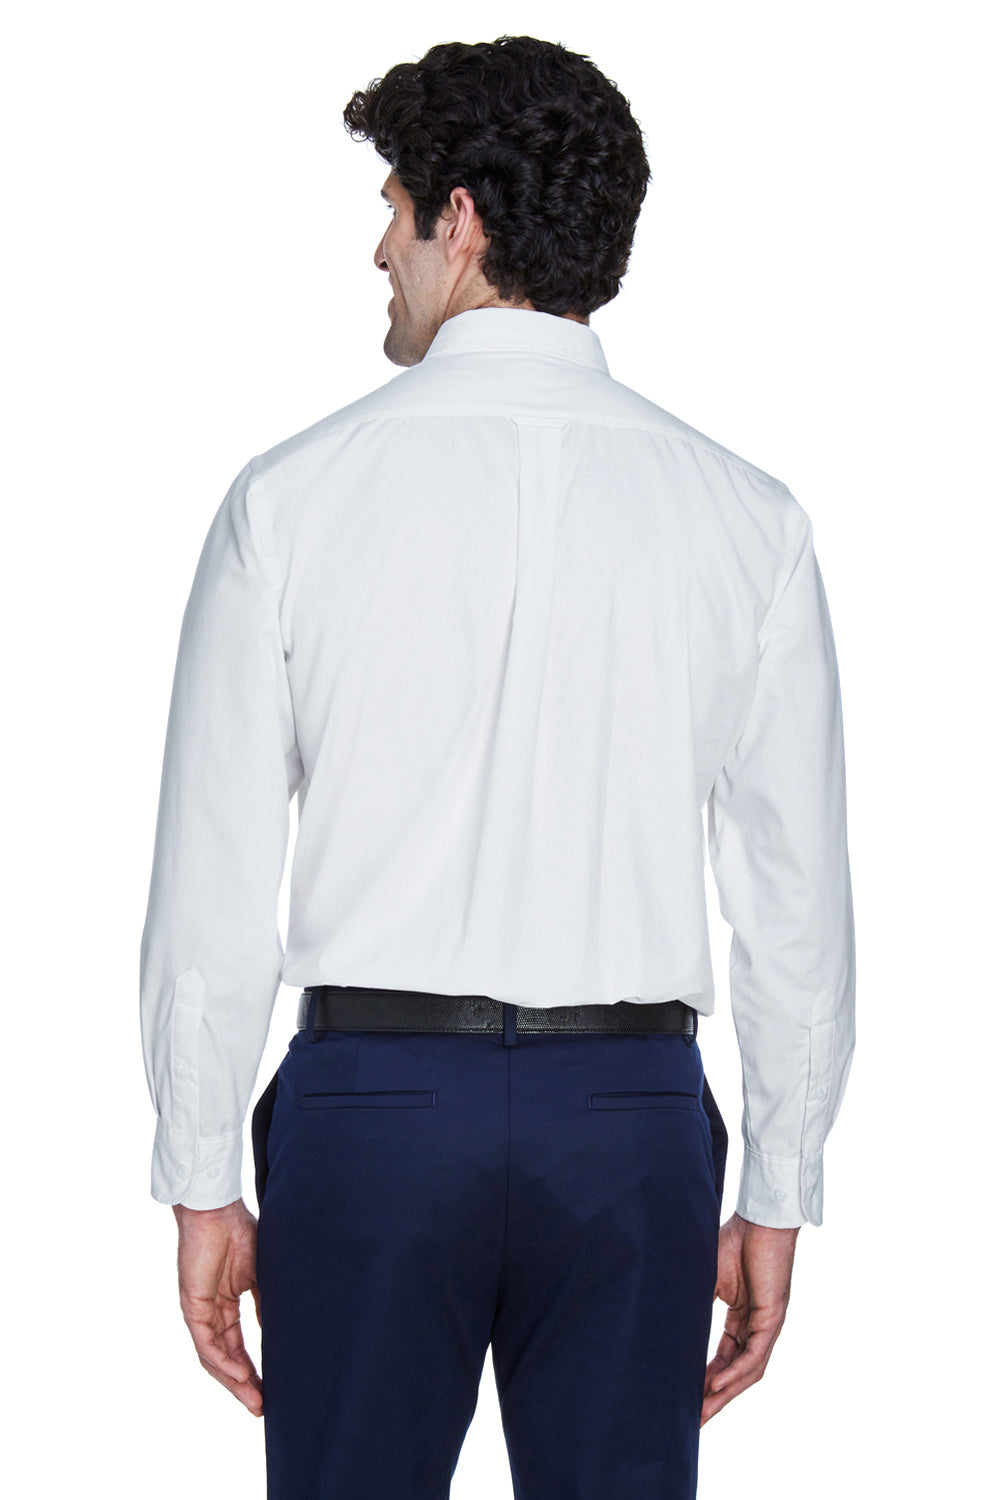 UltraClub 8975 Mens Whisper Long Sleeve Button Down Shirt w/ Pocket White Back